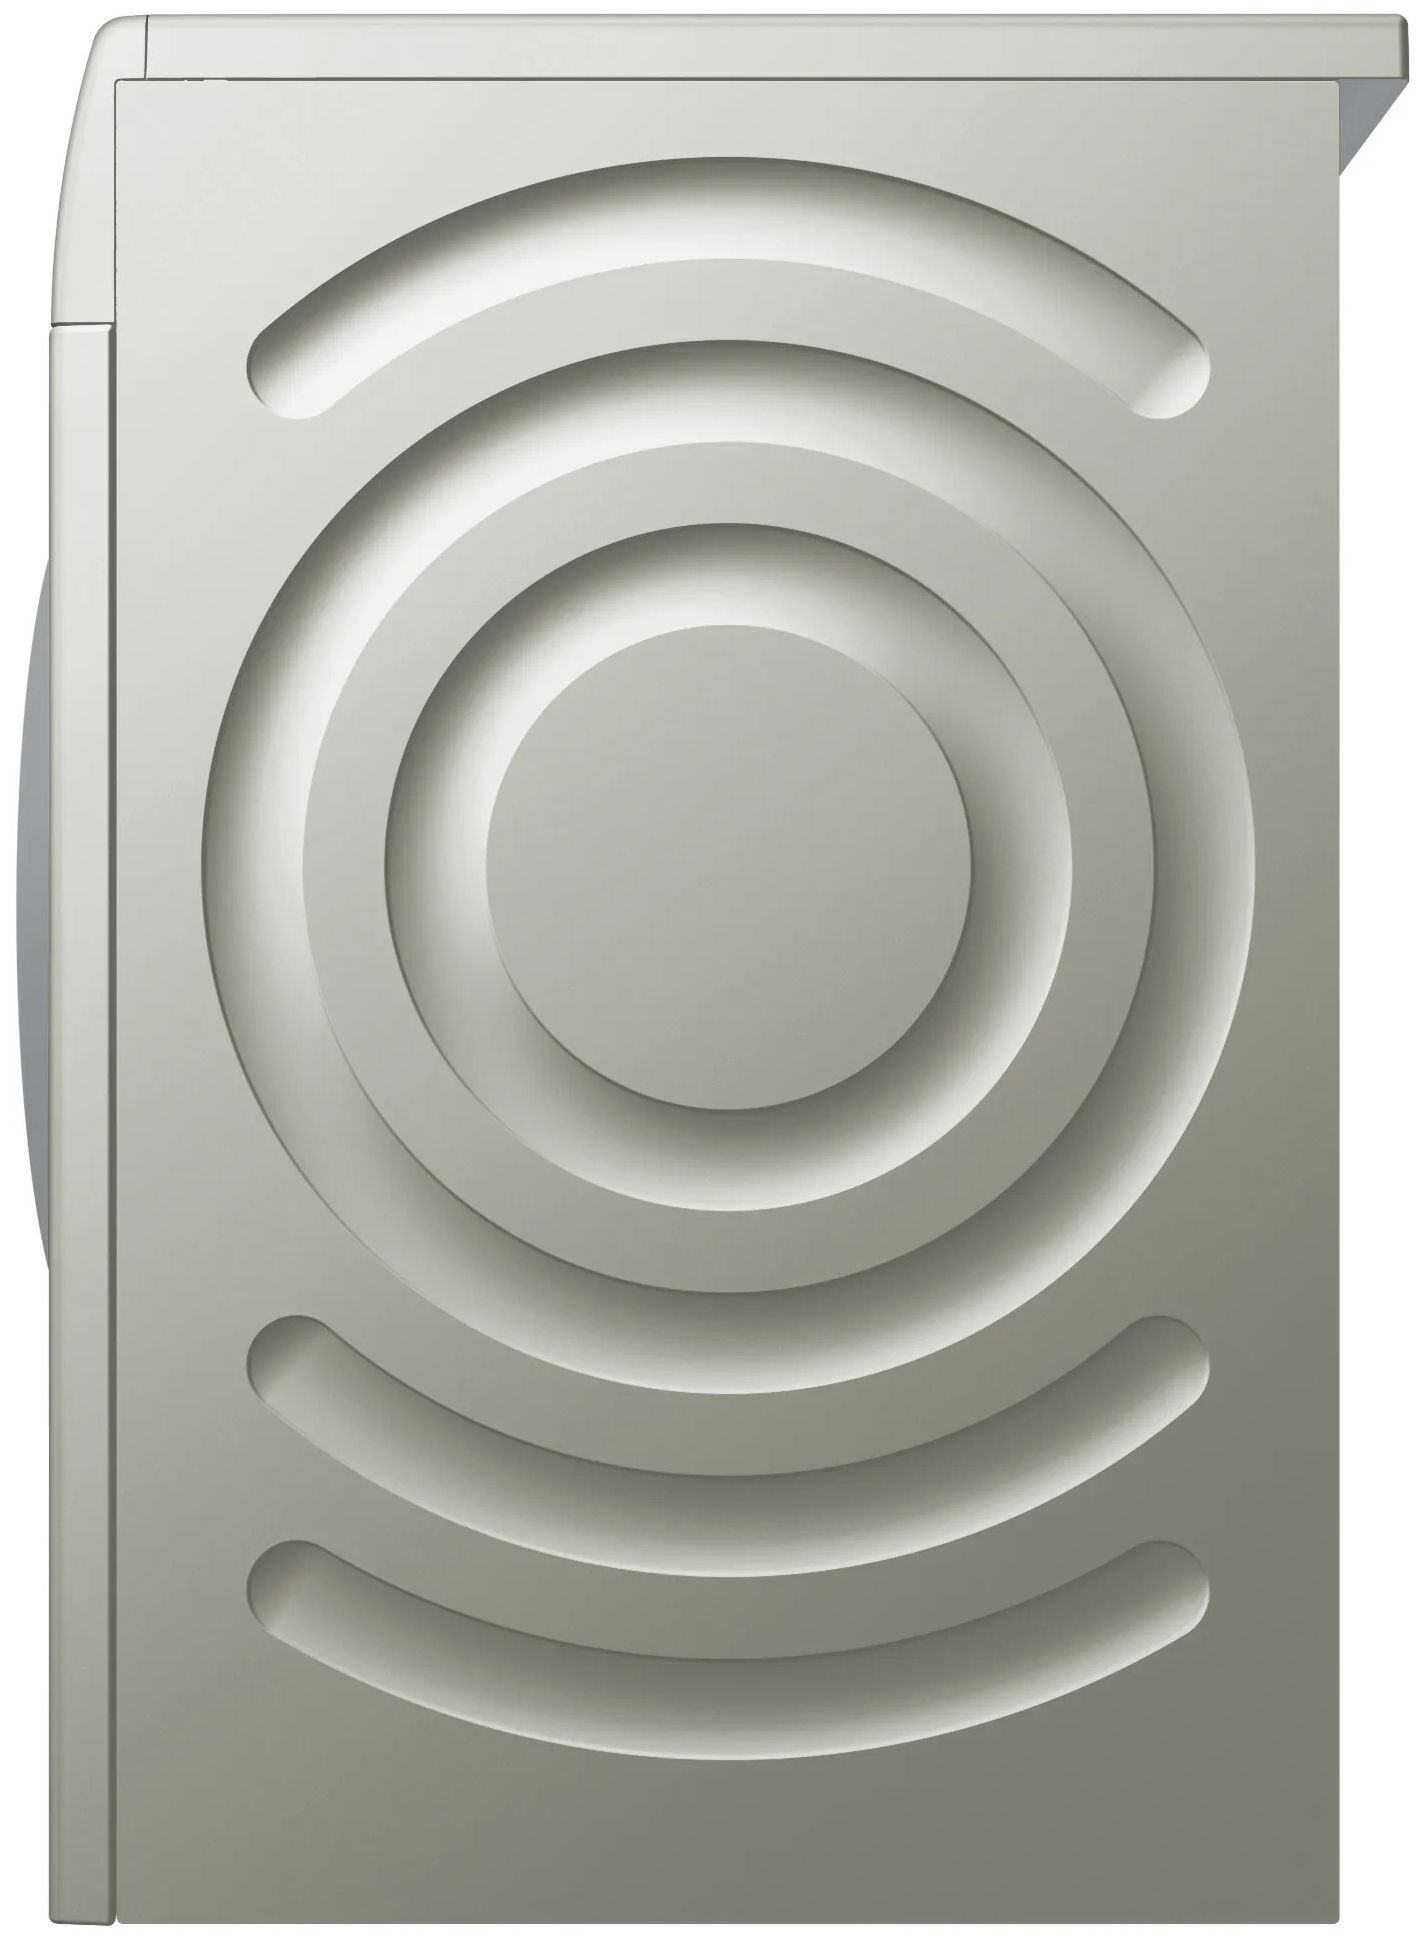 Bosch Serie Frontlader Boomstore Waschmaschine aquaStop AutoClean kg U/min bei WGB2560X0 1600 10 8 A EEK